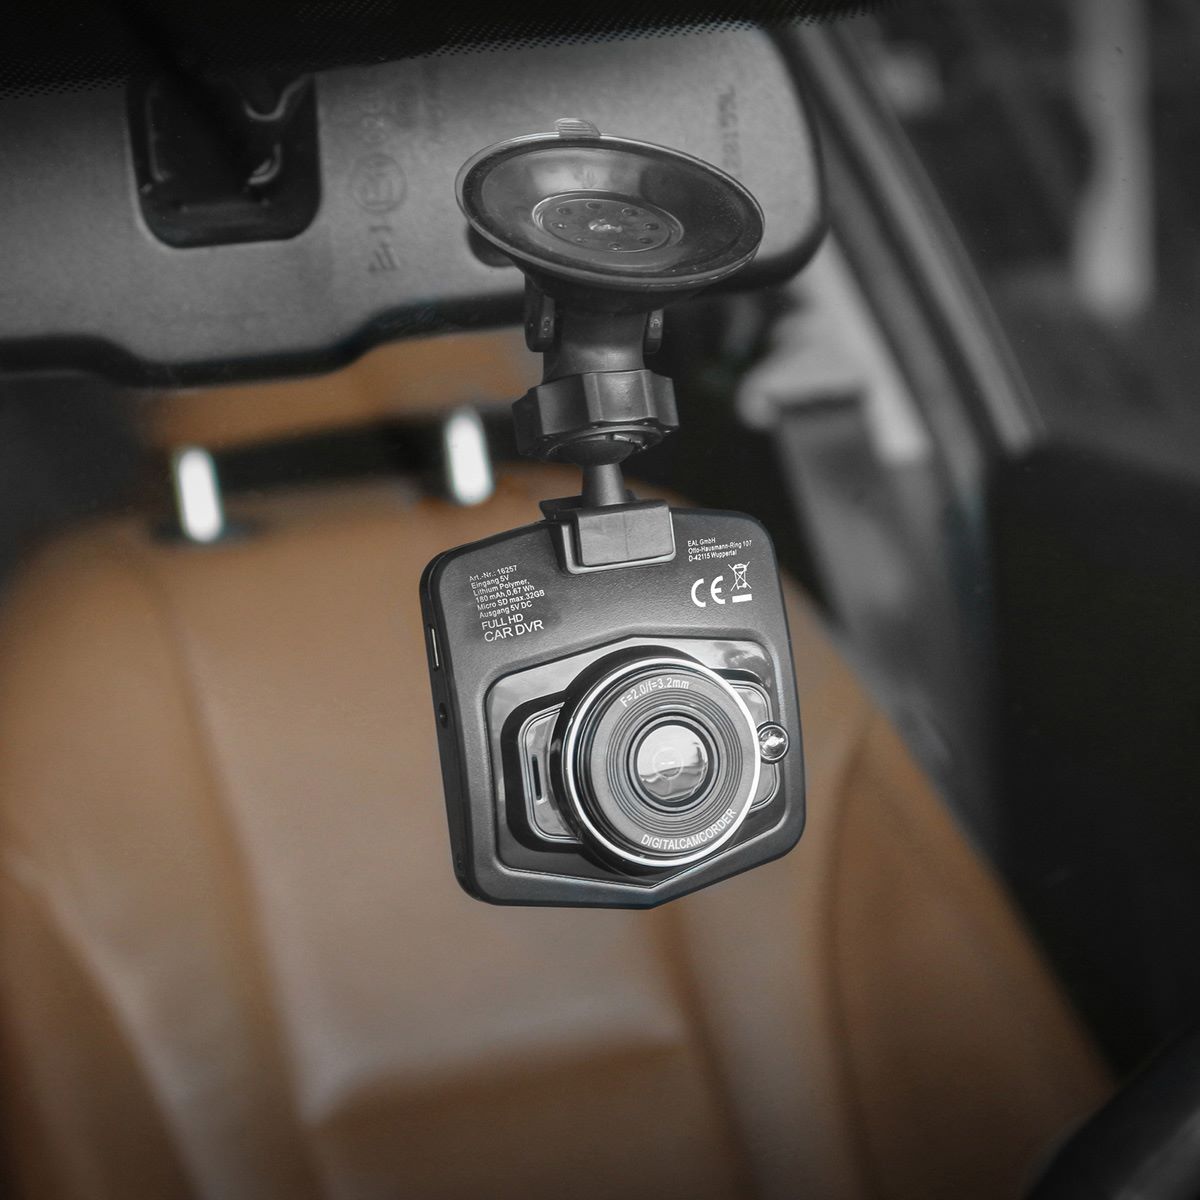 Loisiro - Dashcam Caméra embarquée pour voiture - Eufab